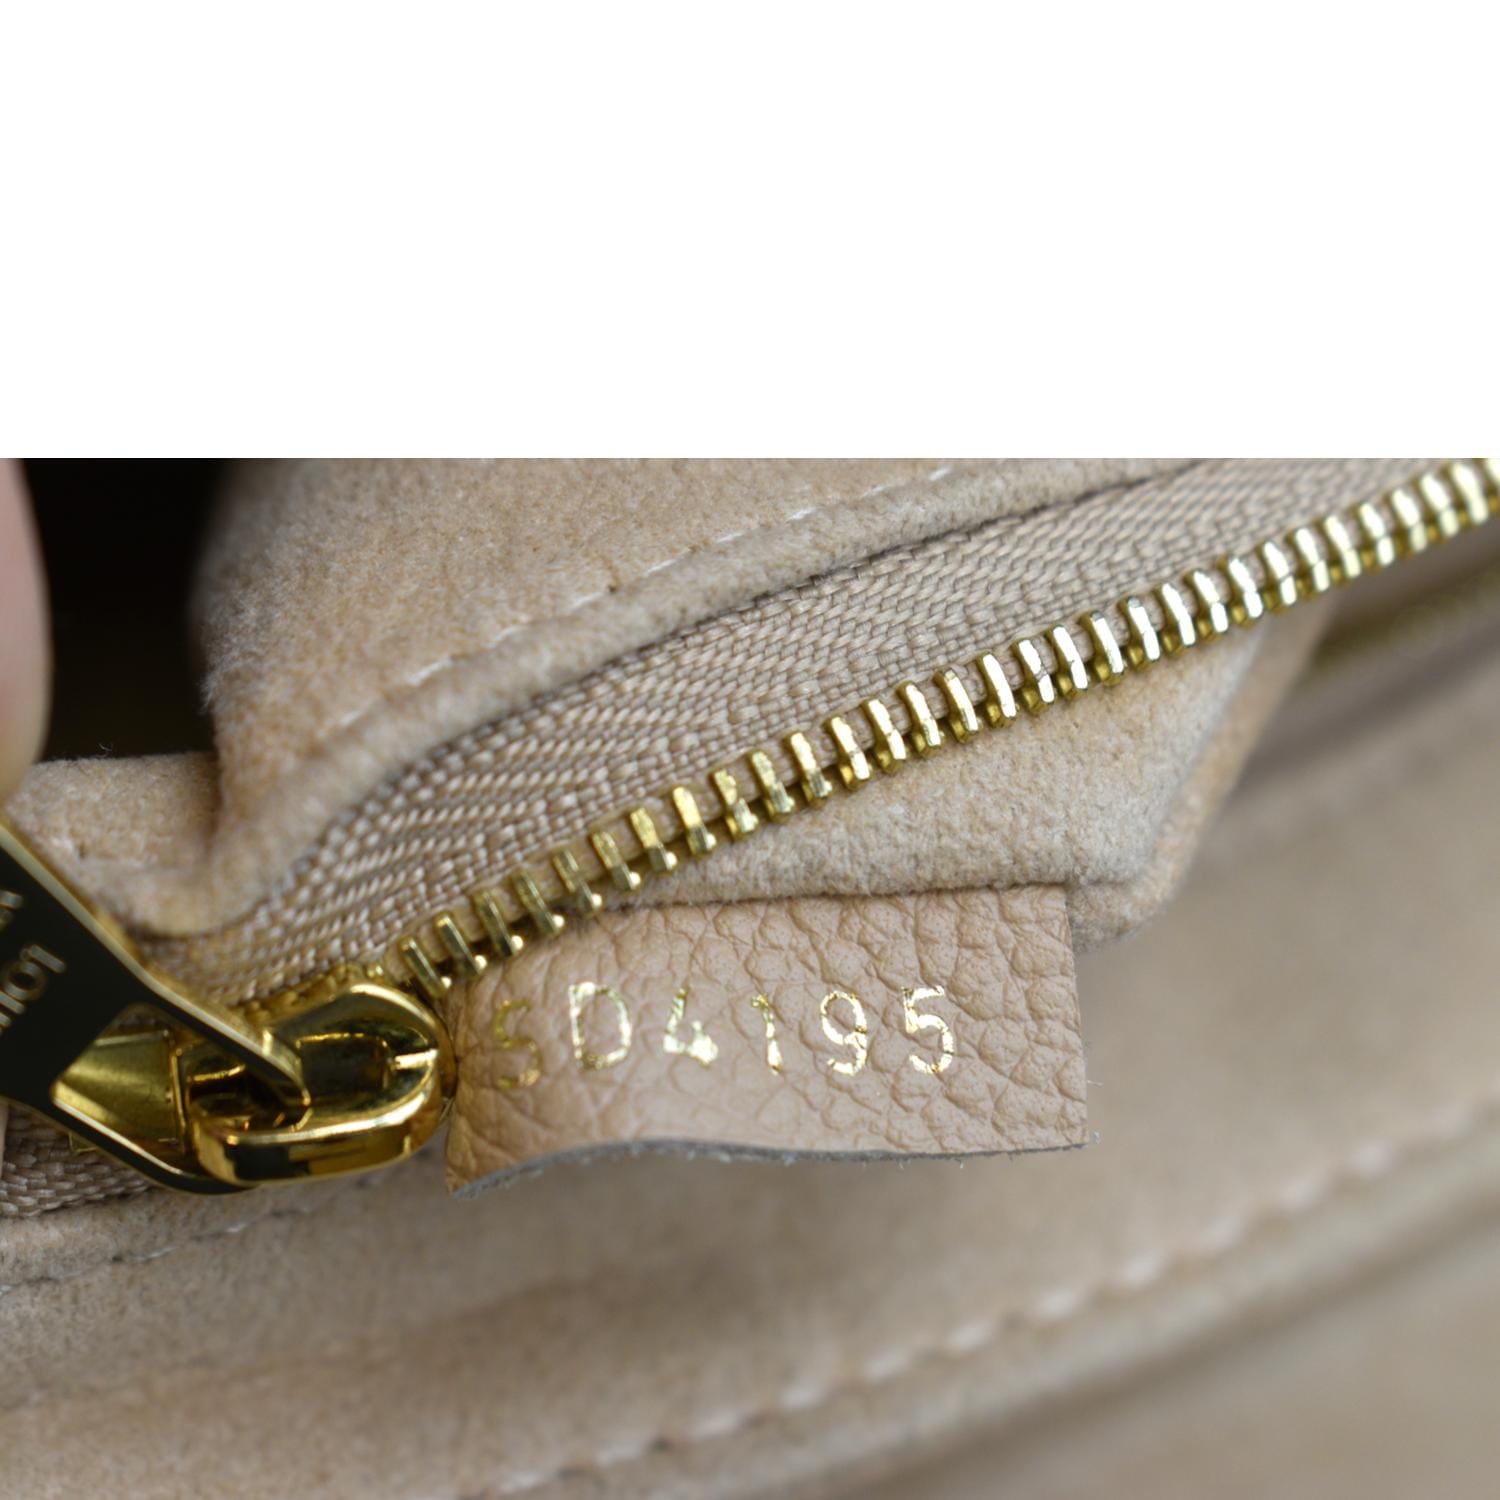 Louis Vuitton St. Germain bag in dune leather, beige Louis Vuitton